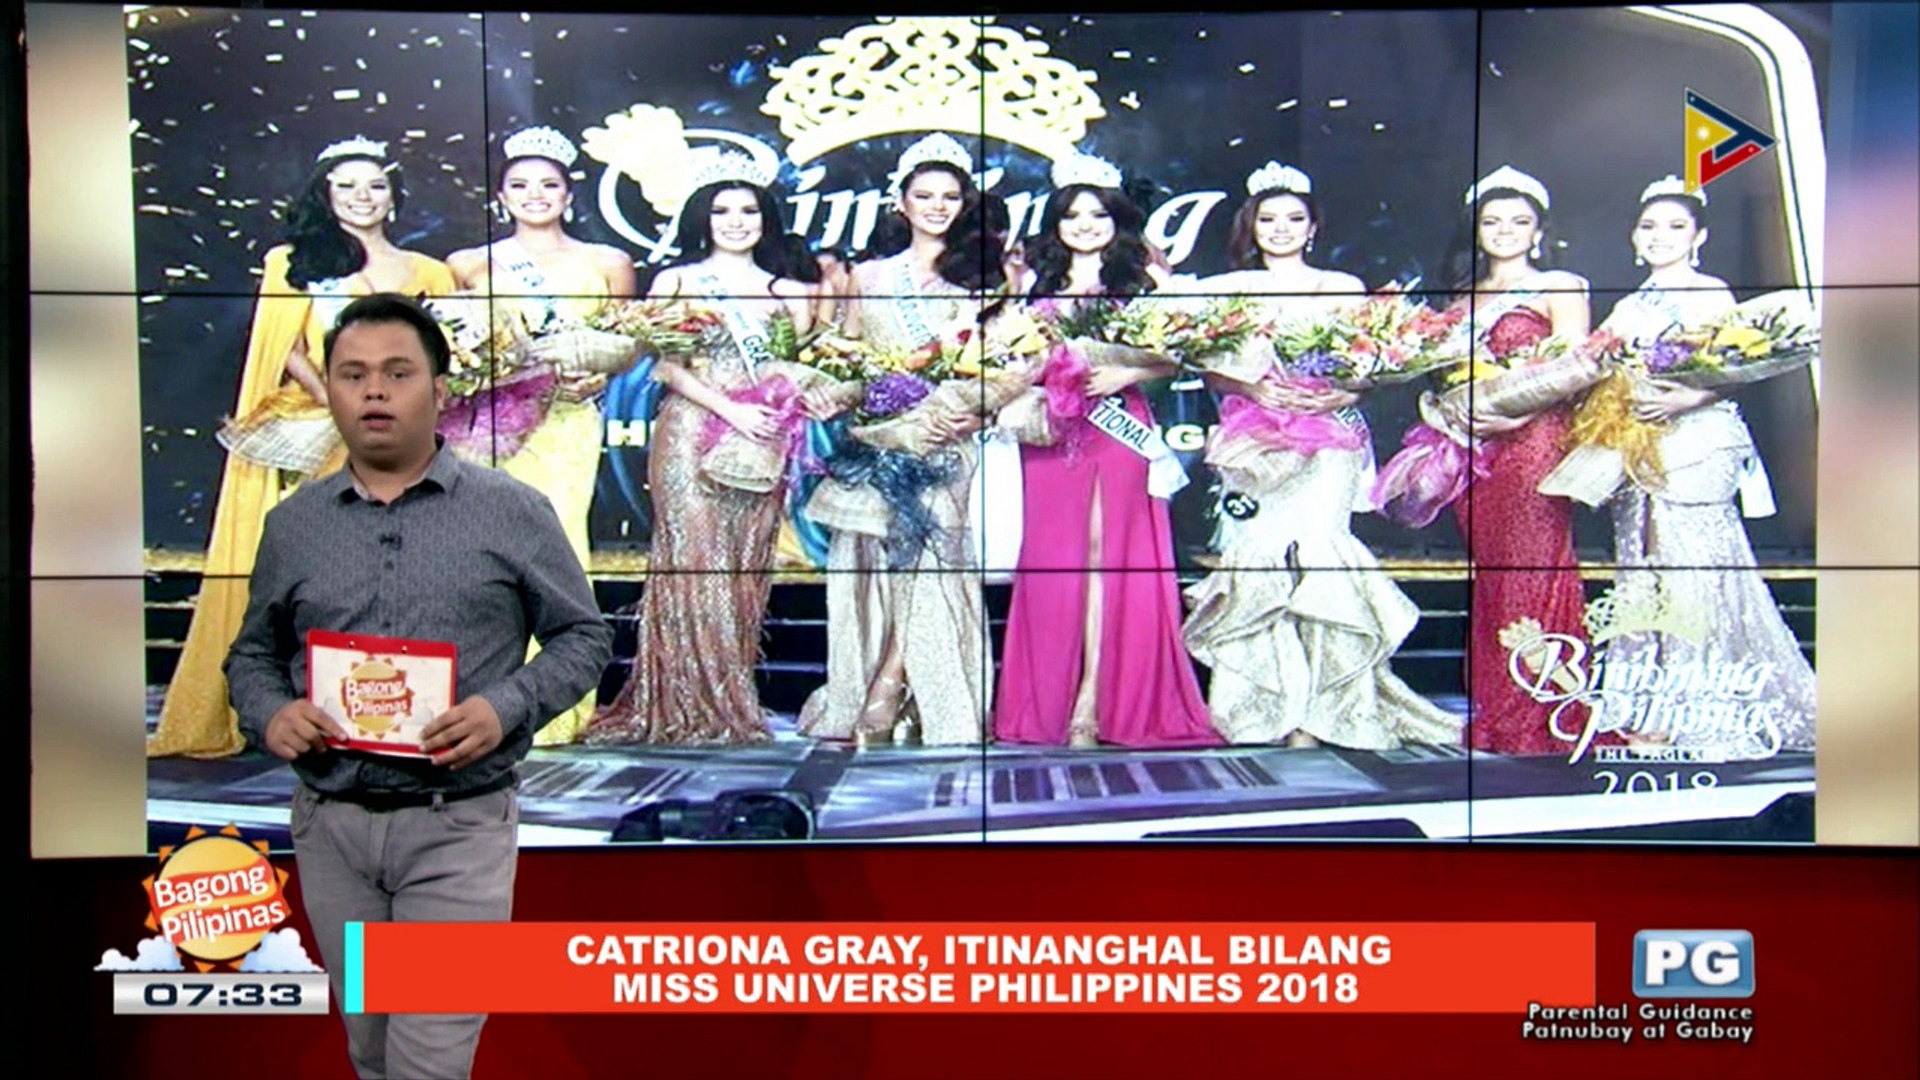 FIFIRAZZI: Catriona Gray, itinanghal bilang Miss Universe Philippines 2018; KZ Tandingan, eliminated